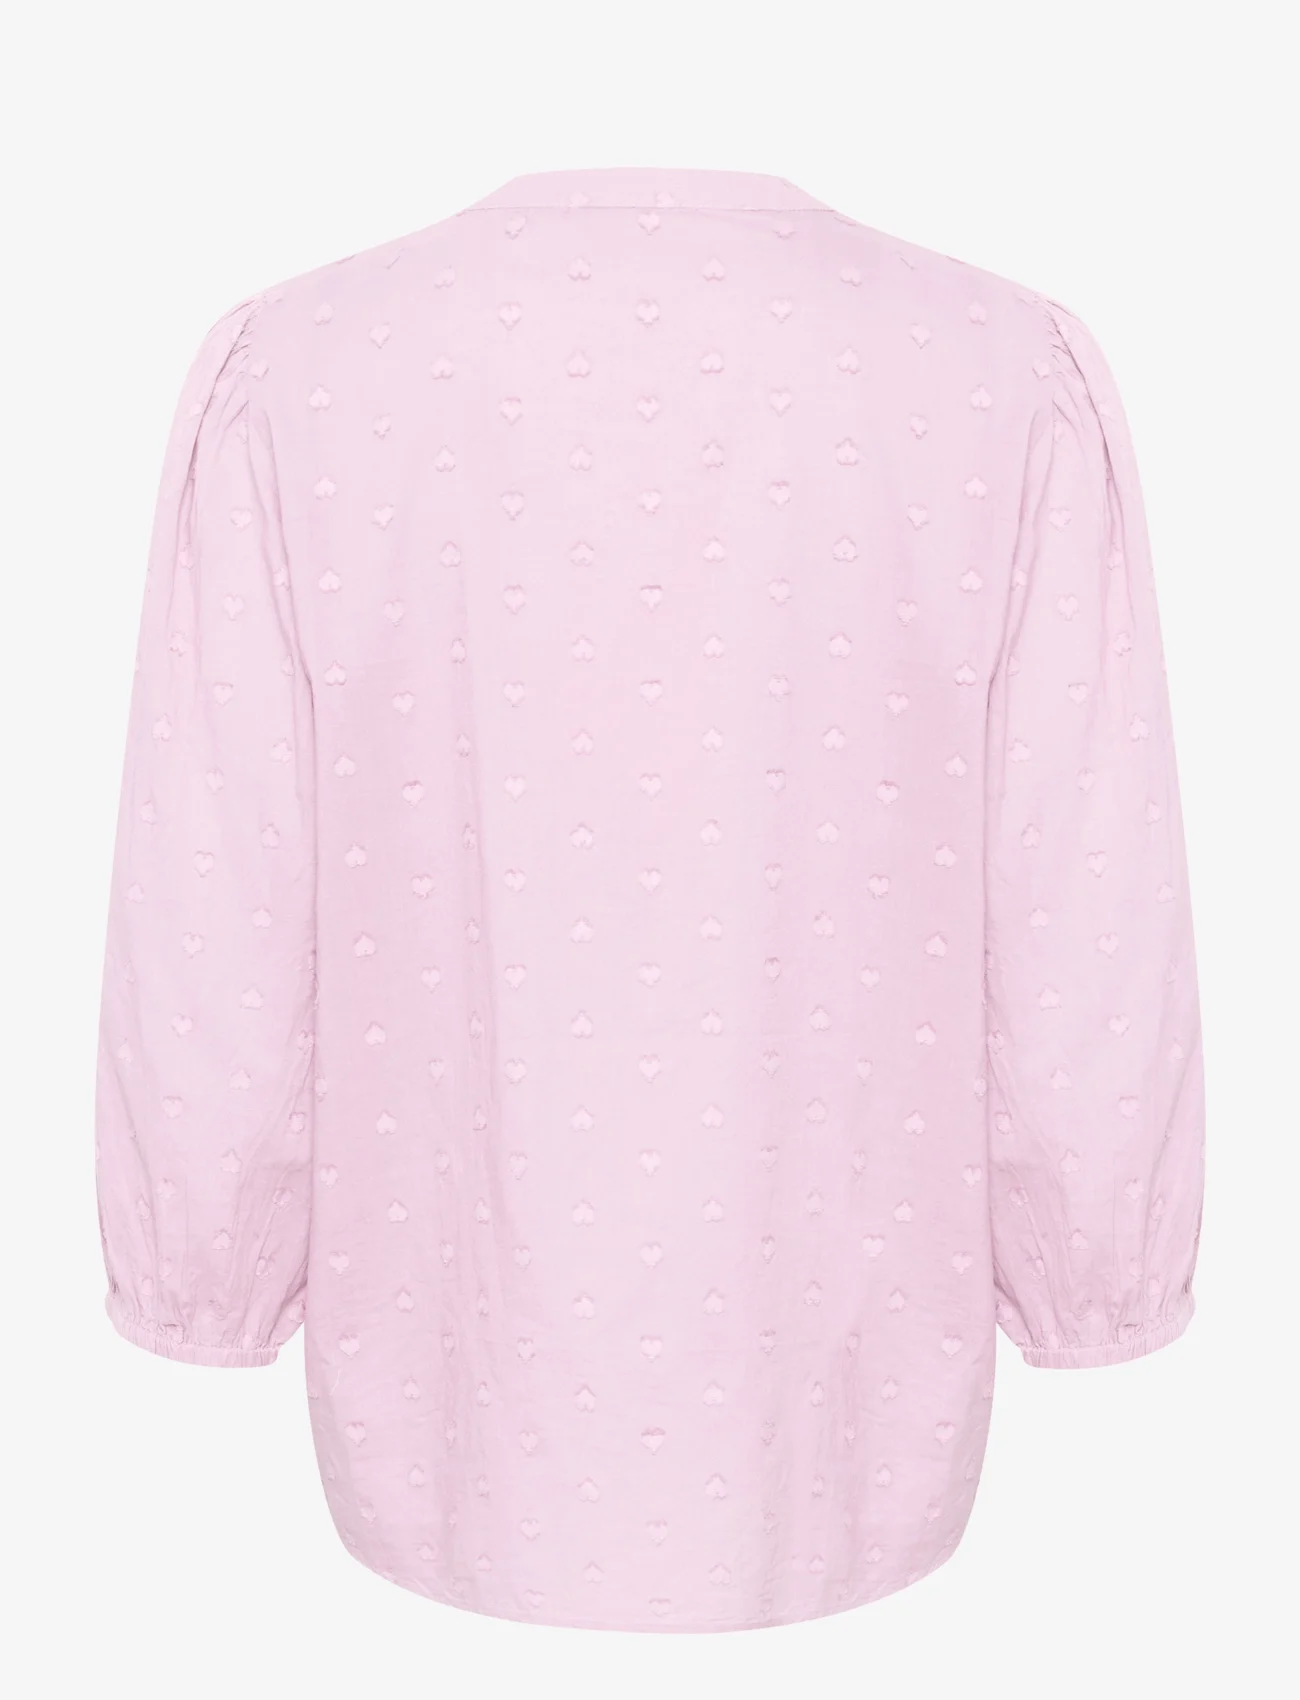 Kaffe - KAjollia Blouse - long-sleeved blouses - pink mist - 1